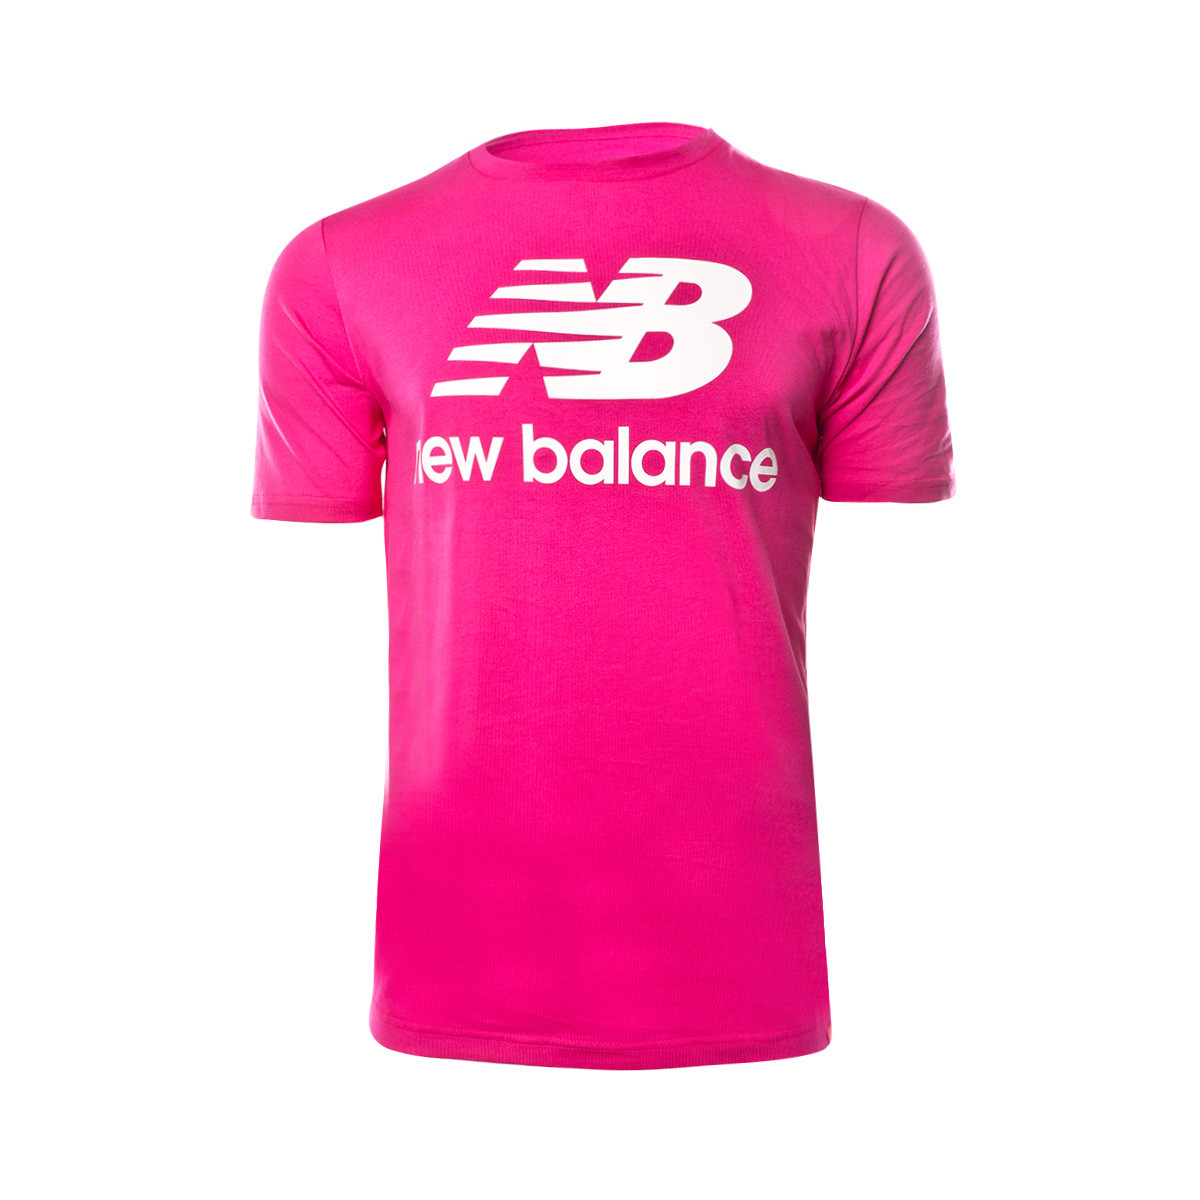 pink new balance shirt 